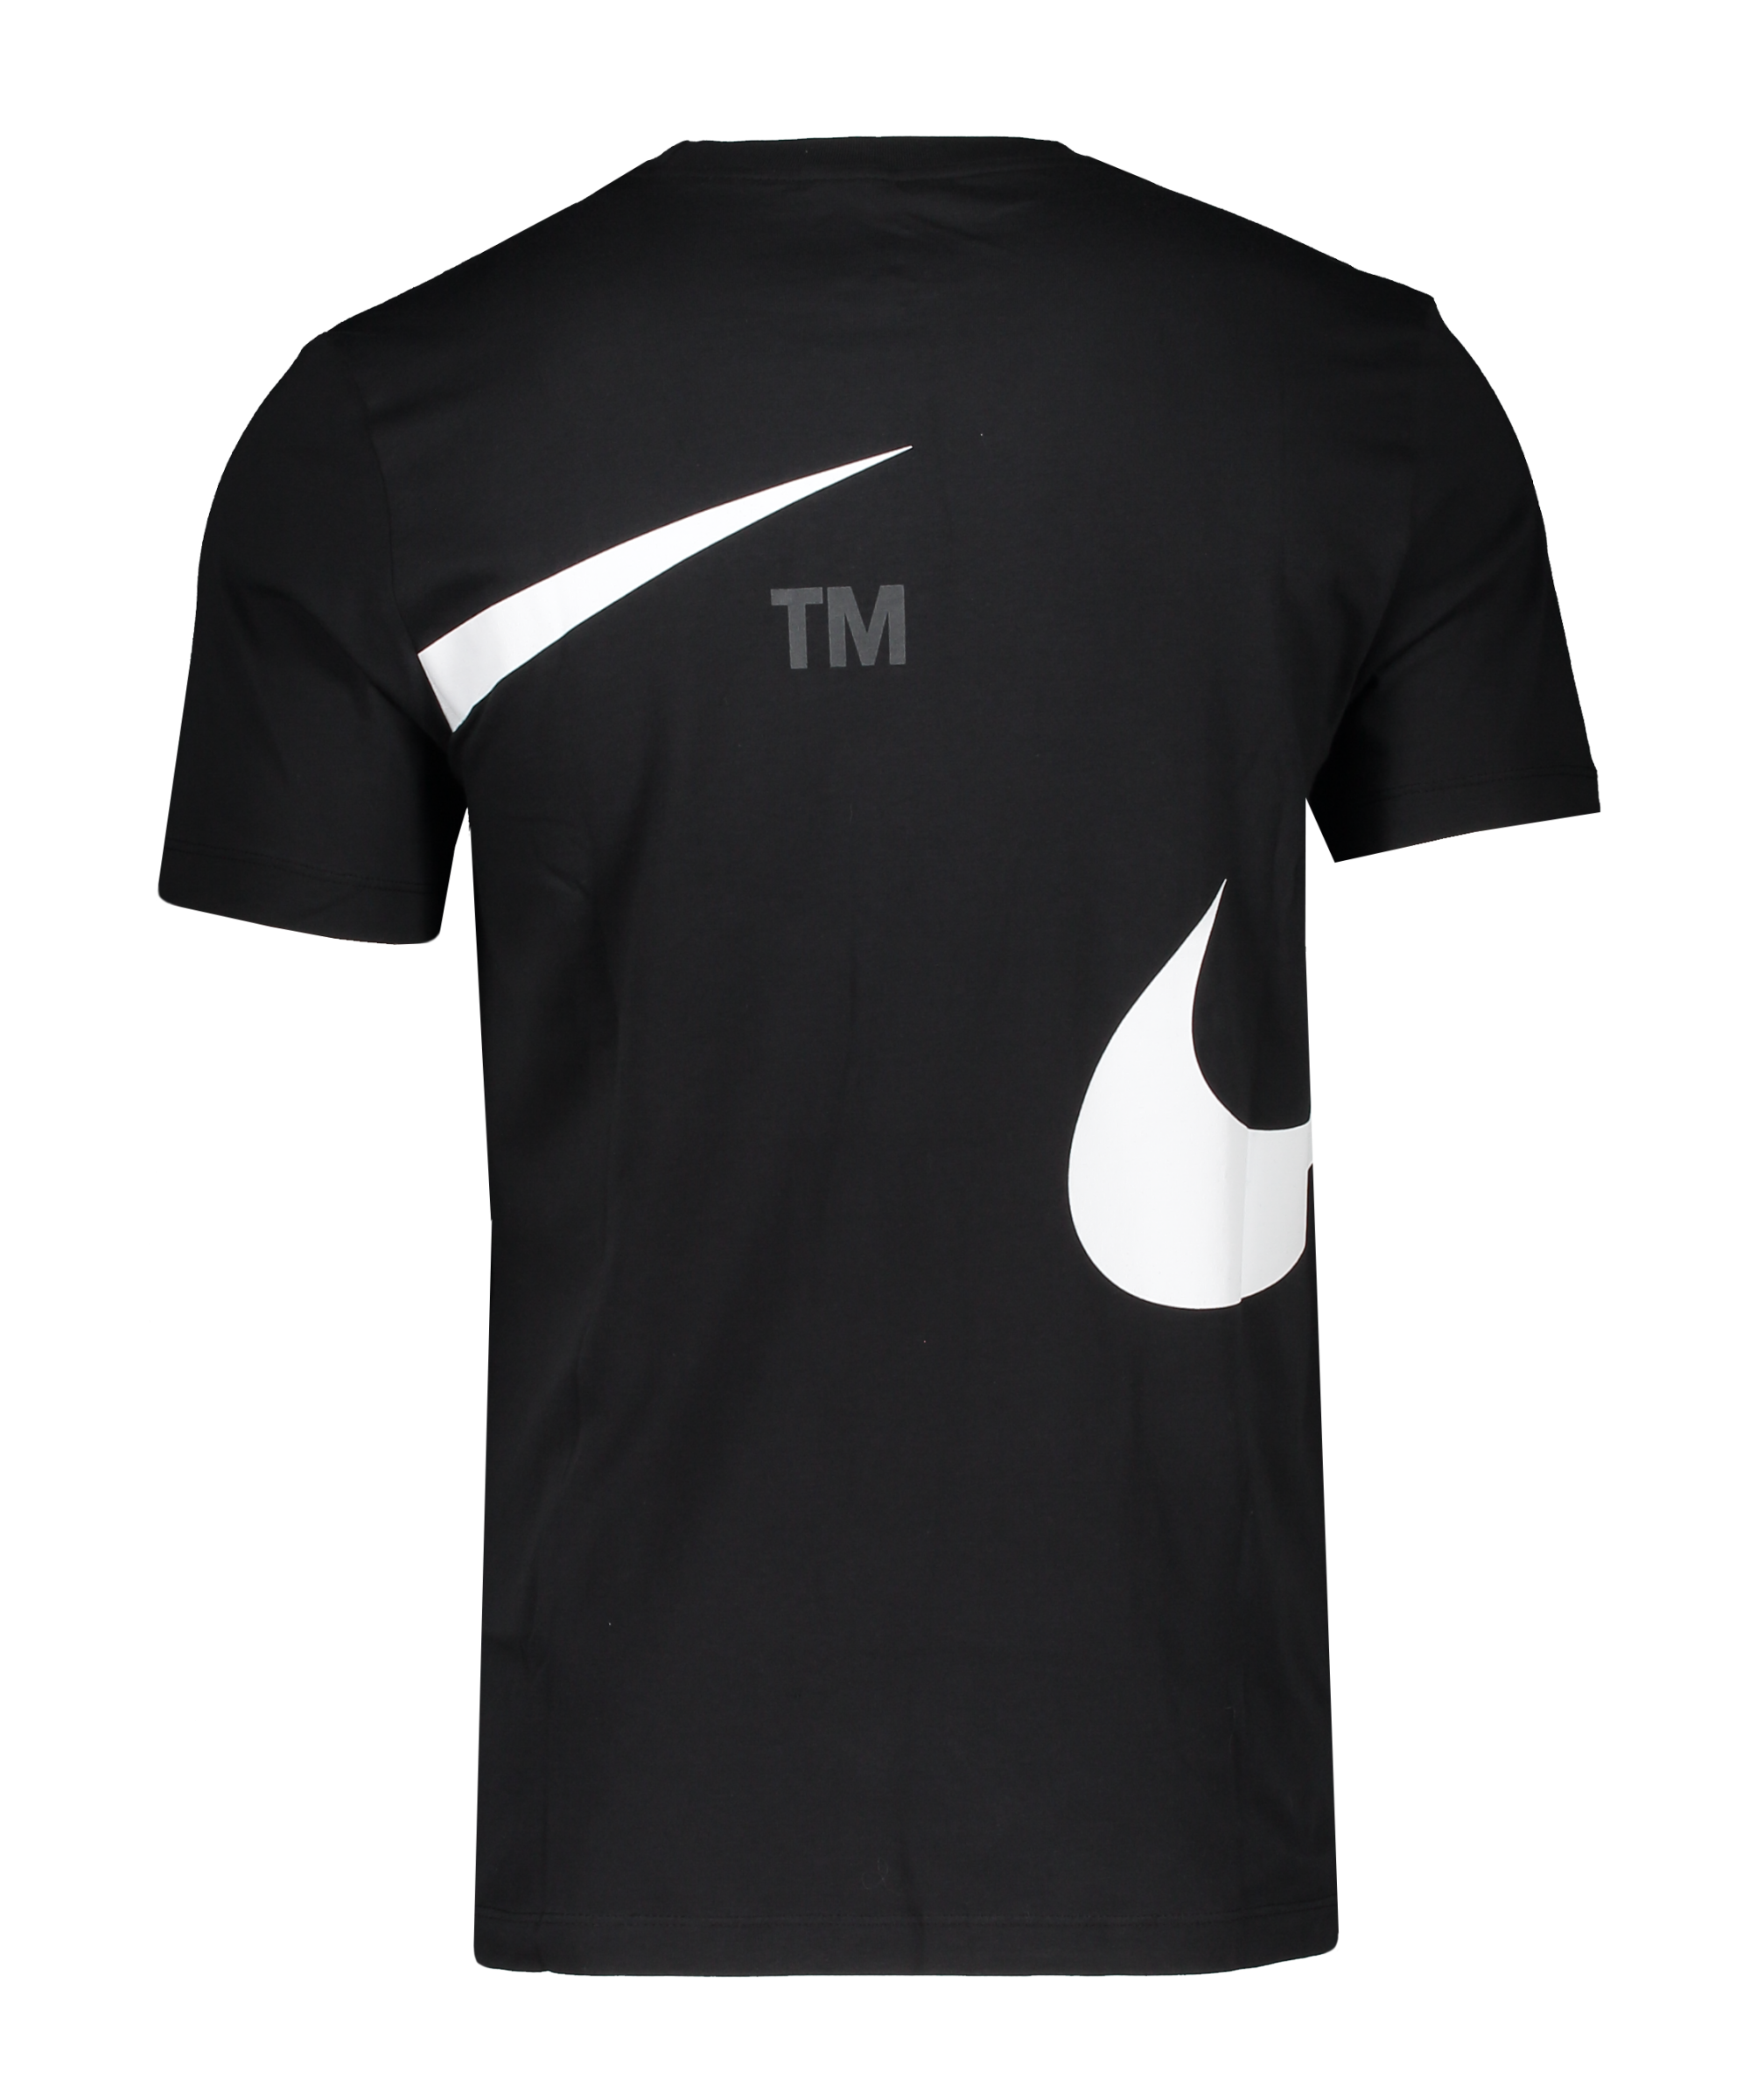 Nike Big Swoosh T-Shirt - Black